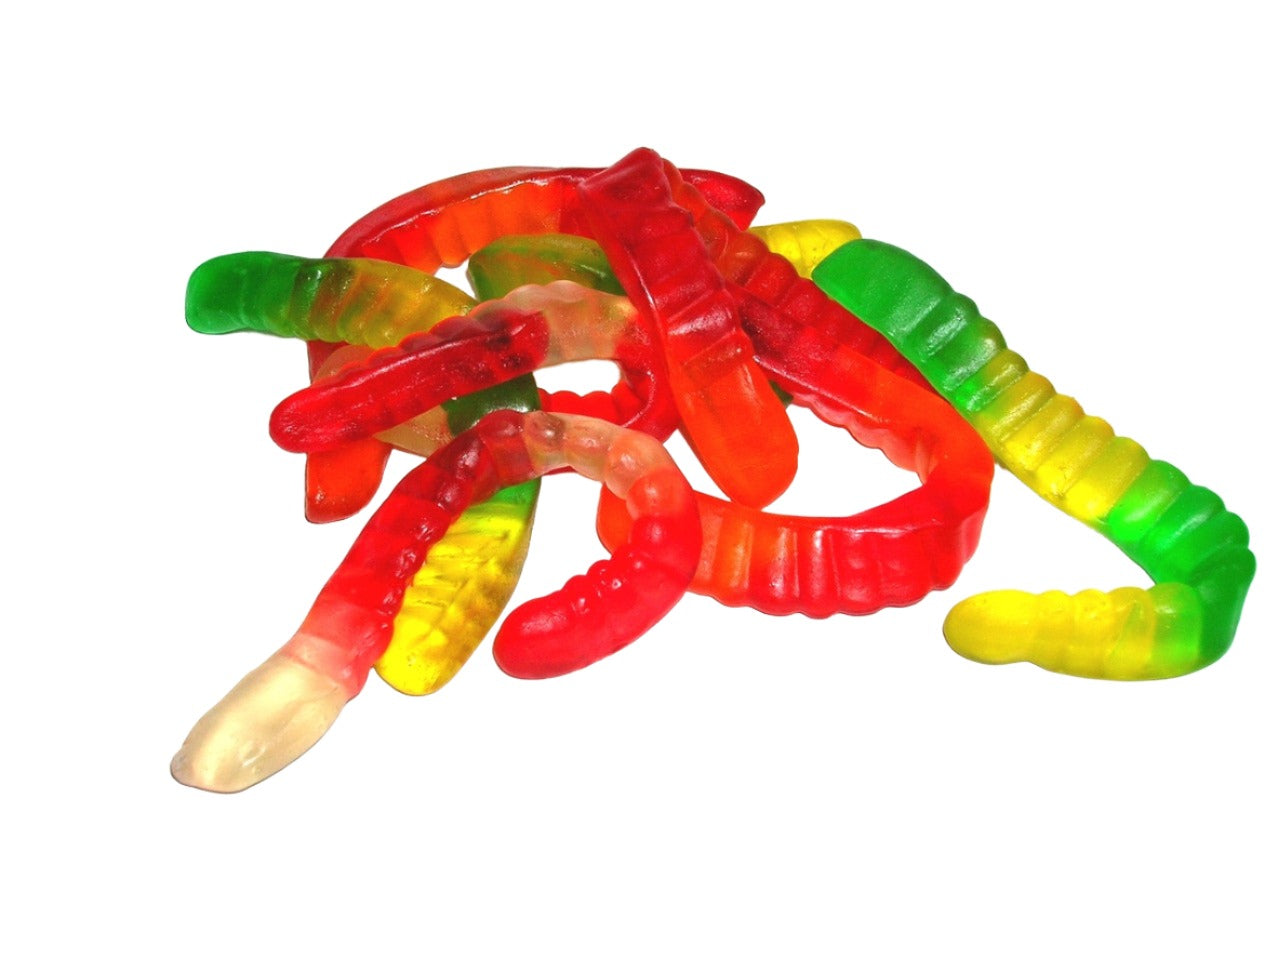 Kervan Gummi Worms Bulk Bag 5lb - 1ct